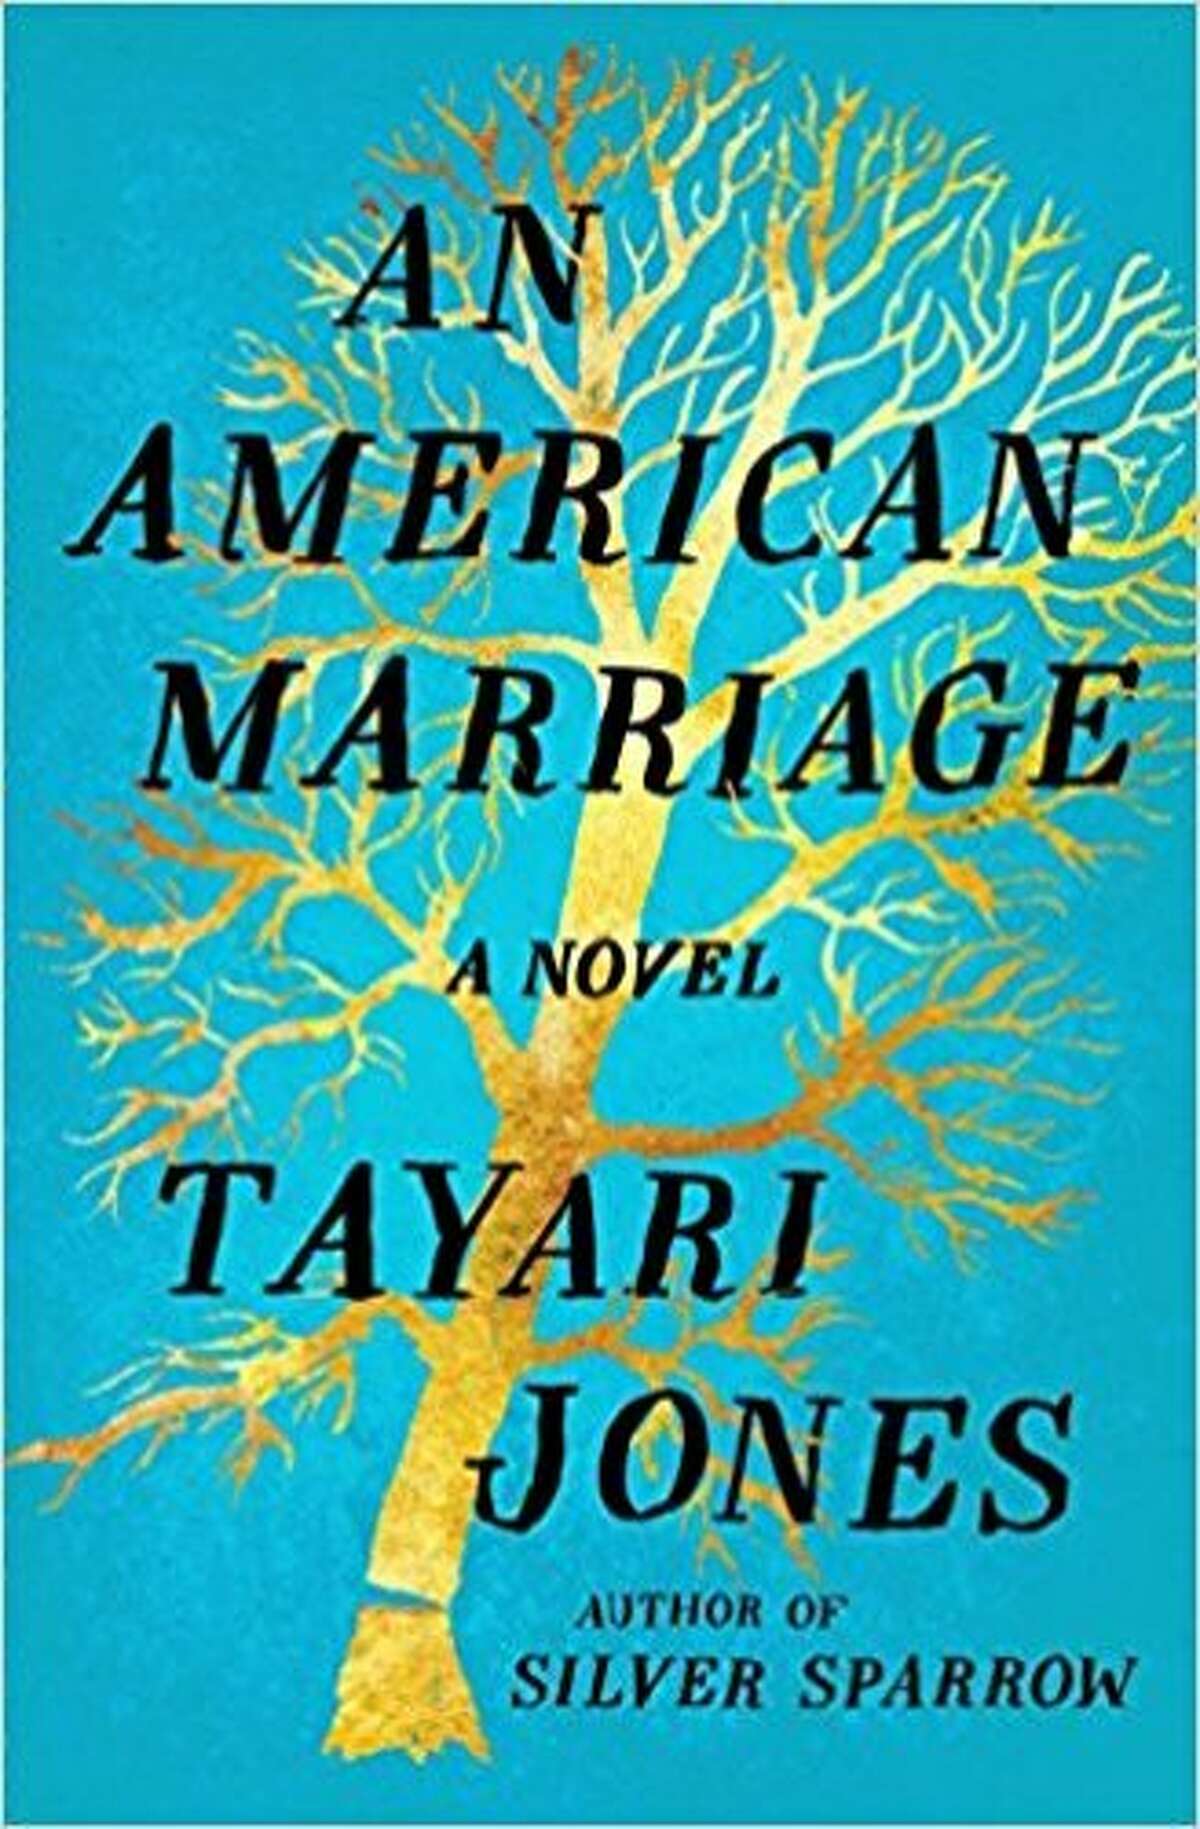 "An American Marriage" by Tayari Jones